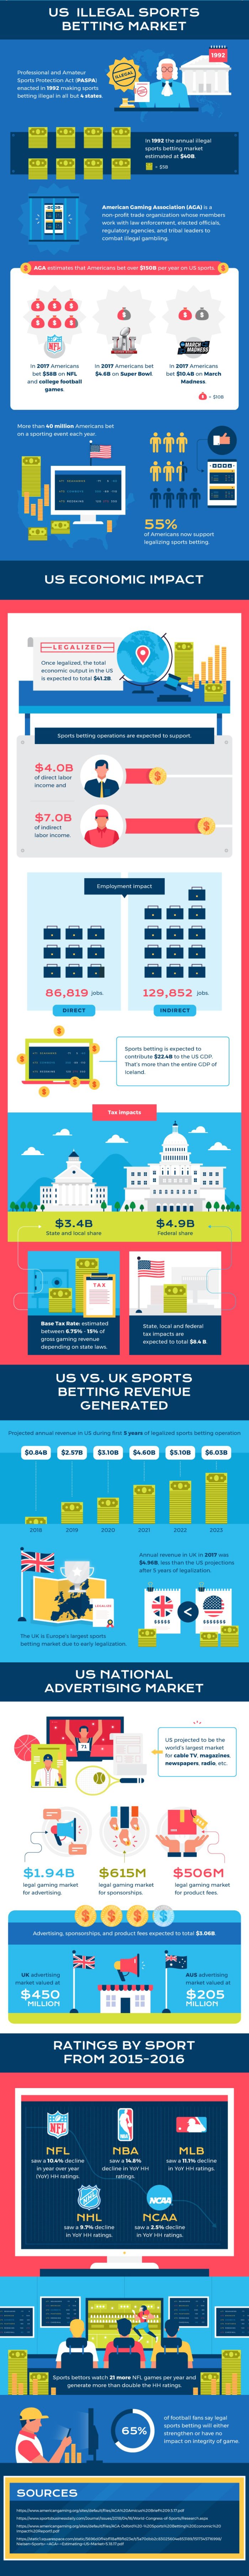 Economic Impact of US Sports Betting NJ Games